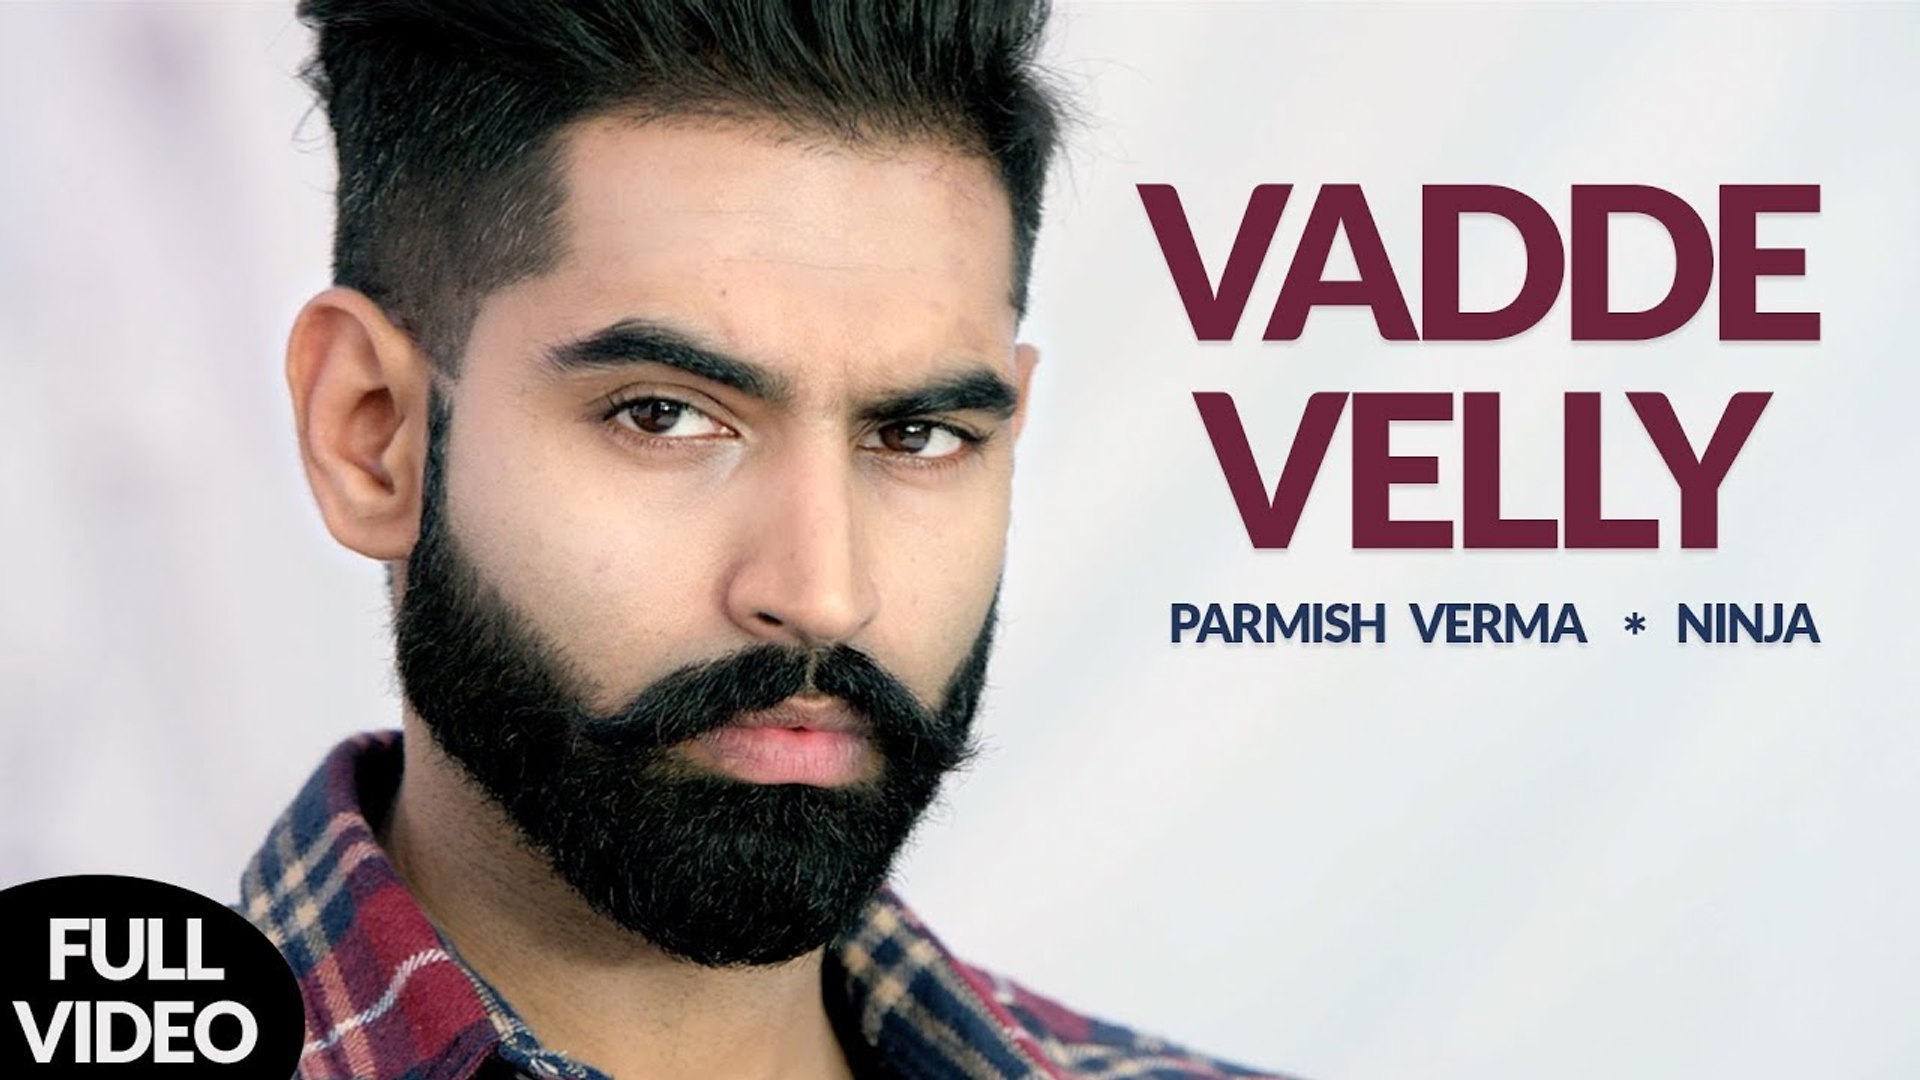 Vadde Velly HD Video Song Rocky Mental Ninja 2017 Parmish Verma Latest  Punjabi Songs - video Dailymotion